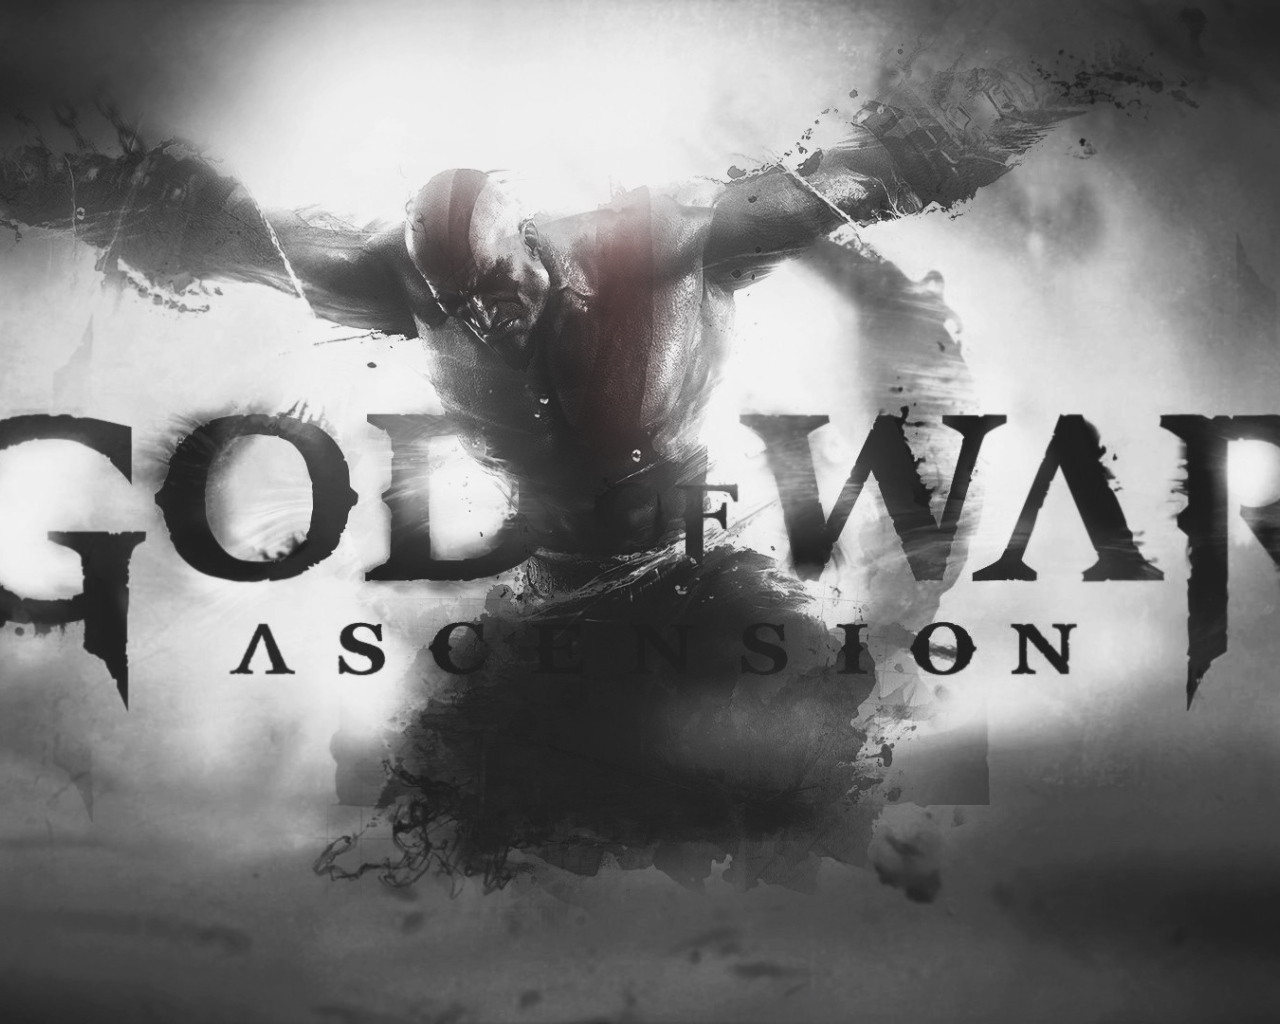 God of War: Ascension: новая игра для PS4